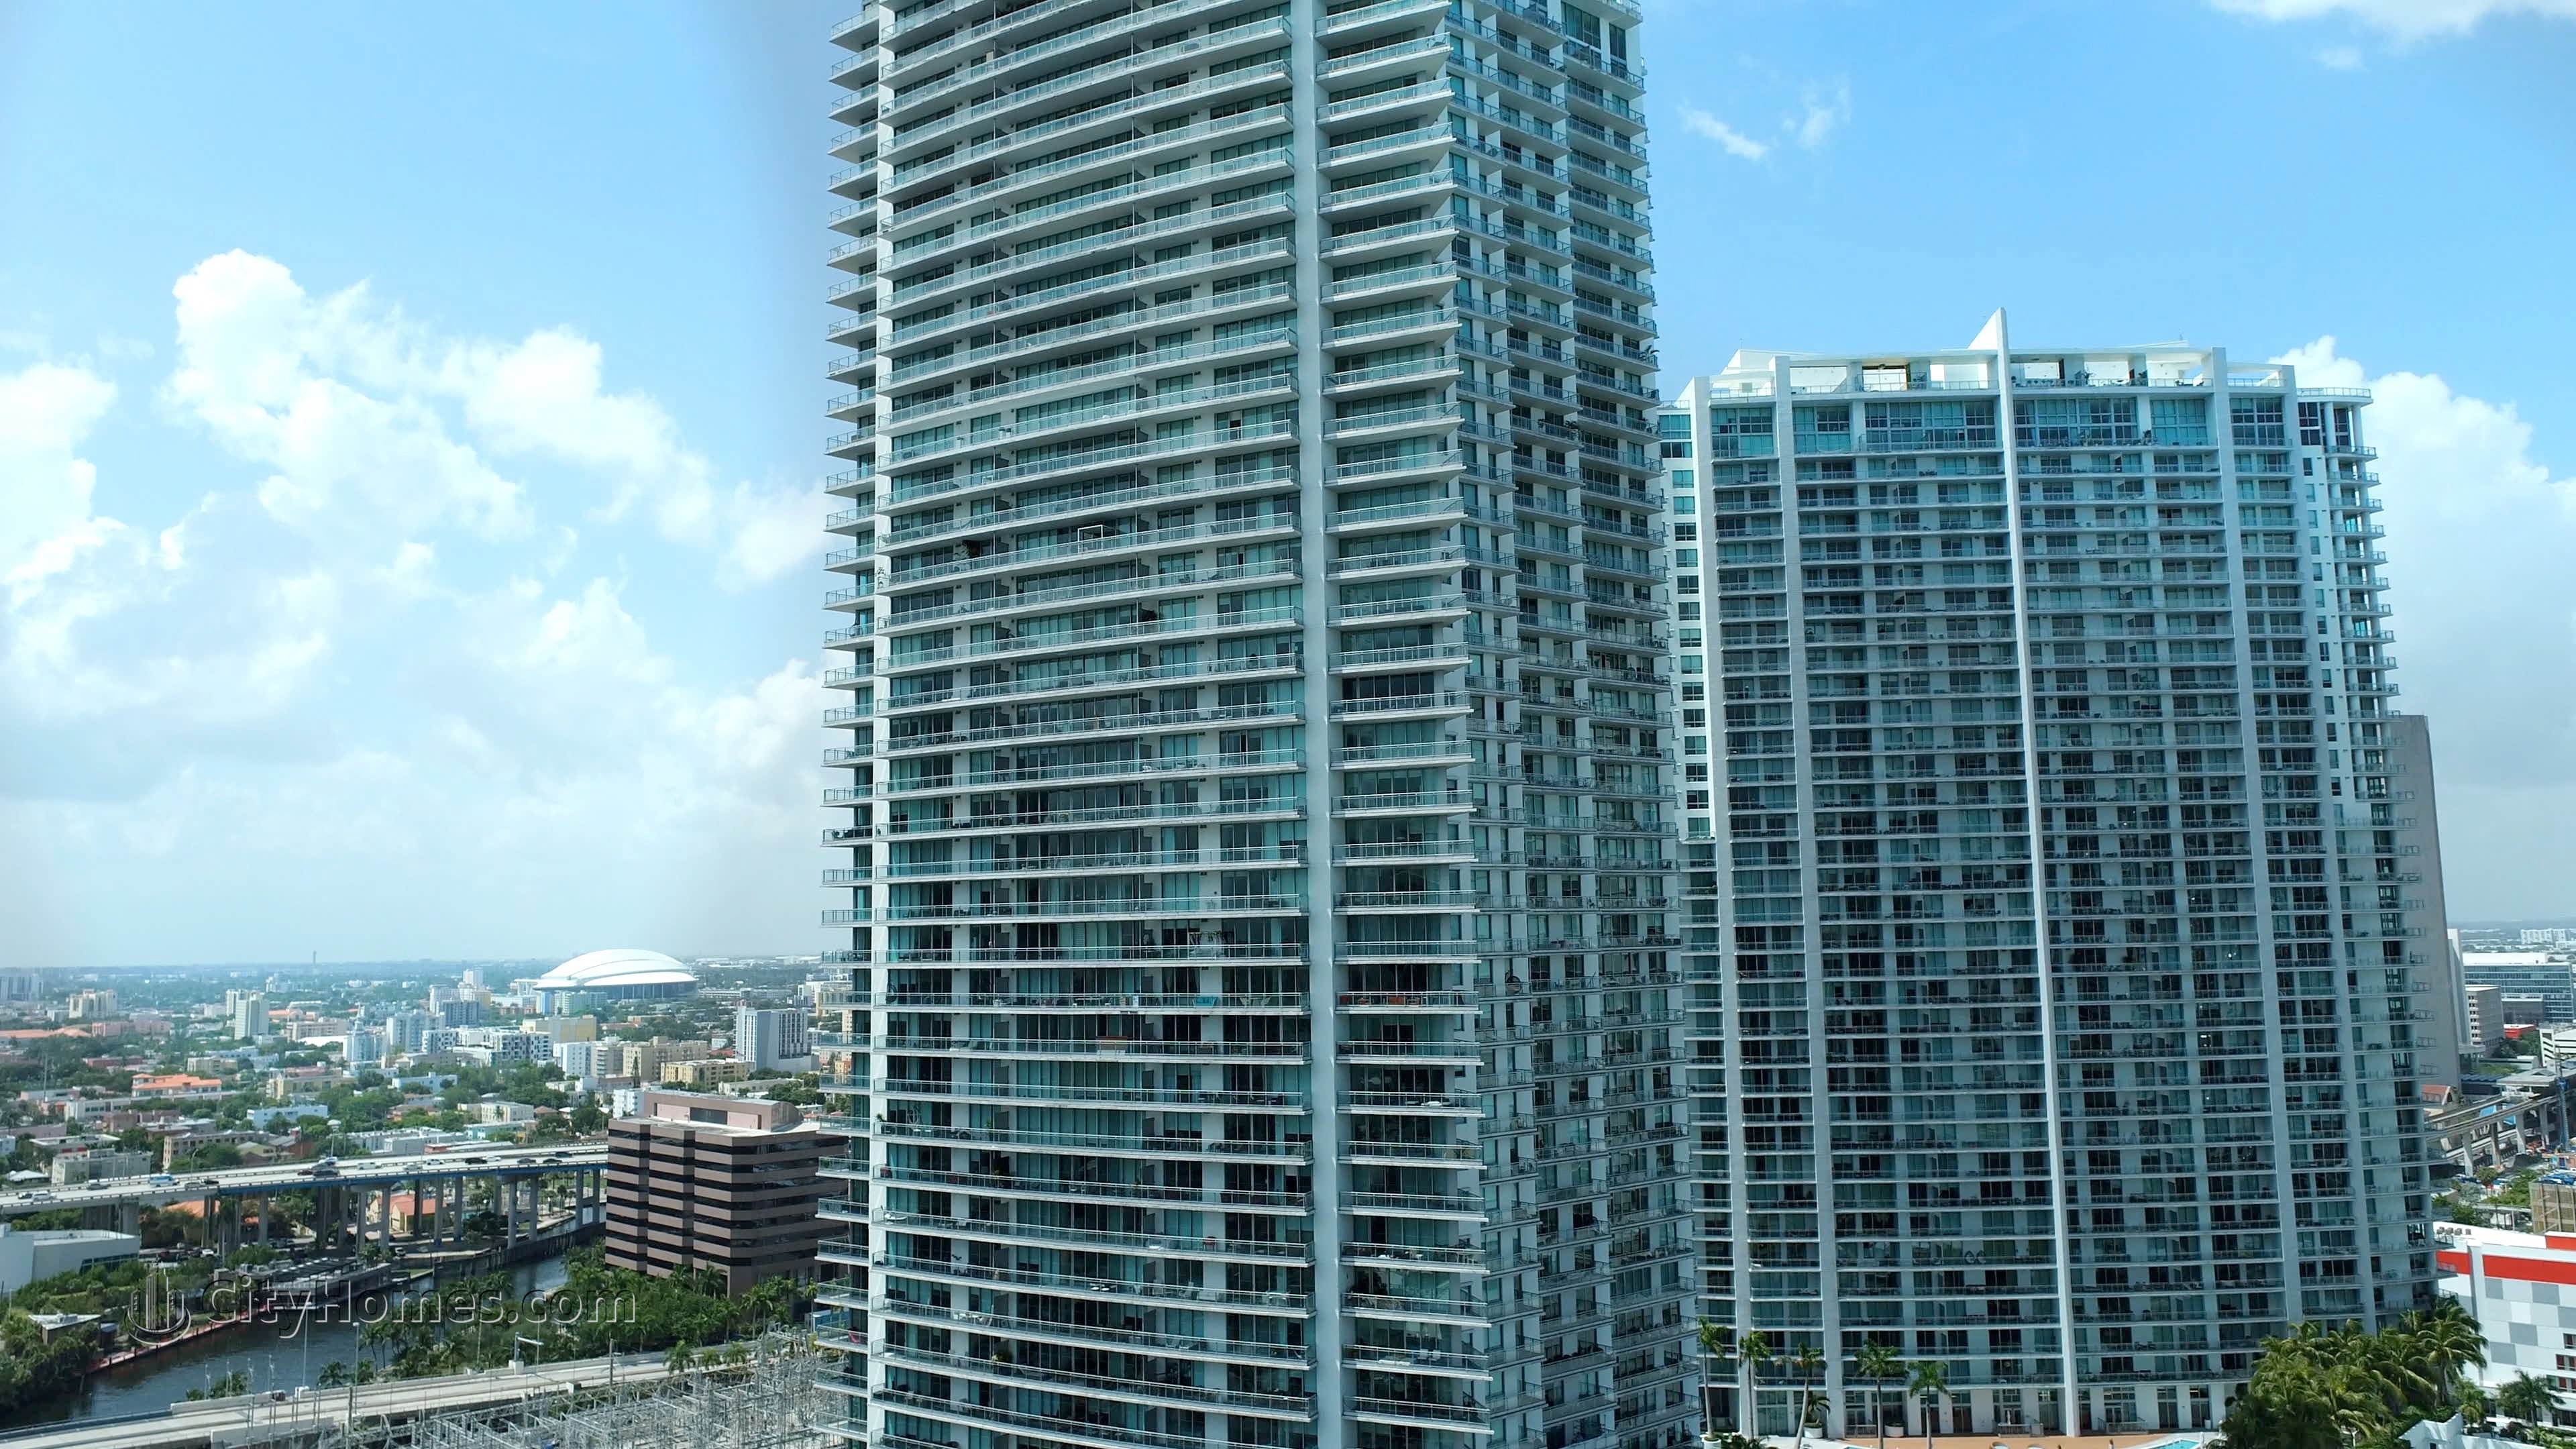 4. Mint xây dựng tại 92 SW 3rd St, Downtown Miami, Miami, FL 33130